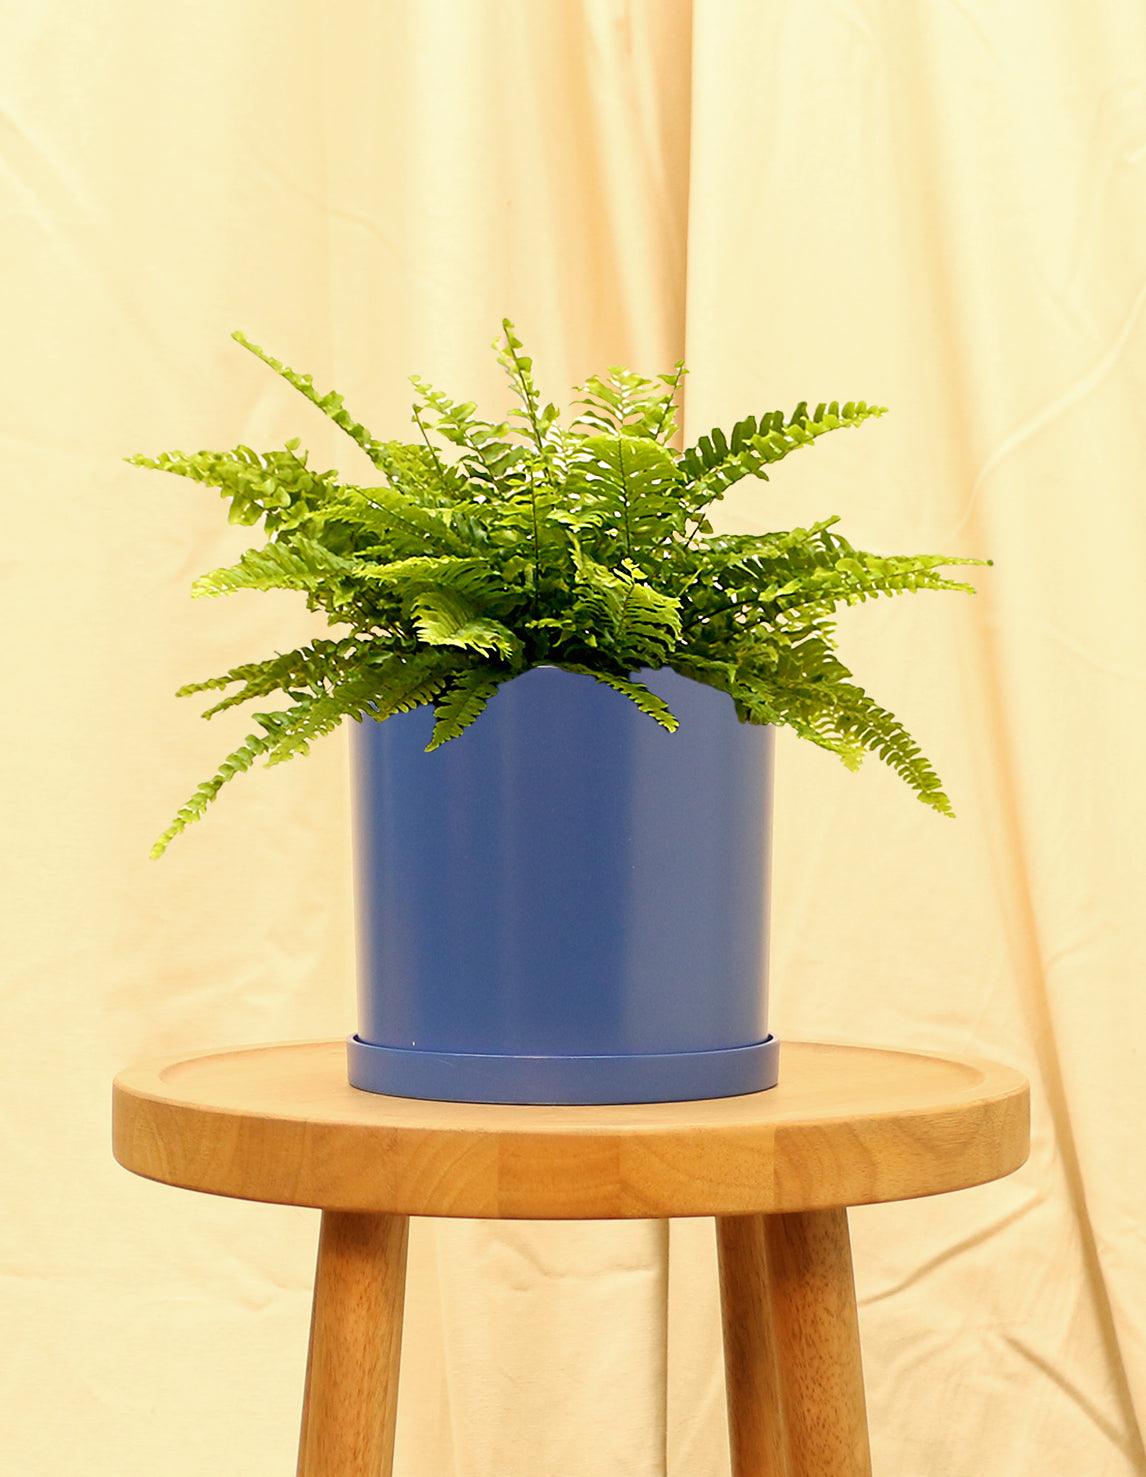 Medium Indoor Boston Fern Plant in blue pot.